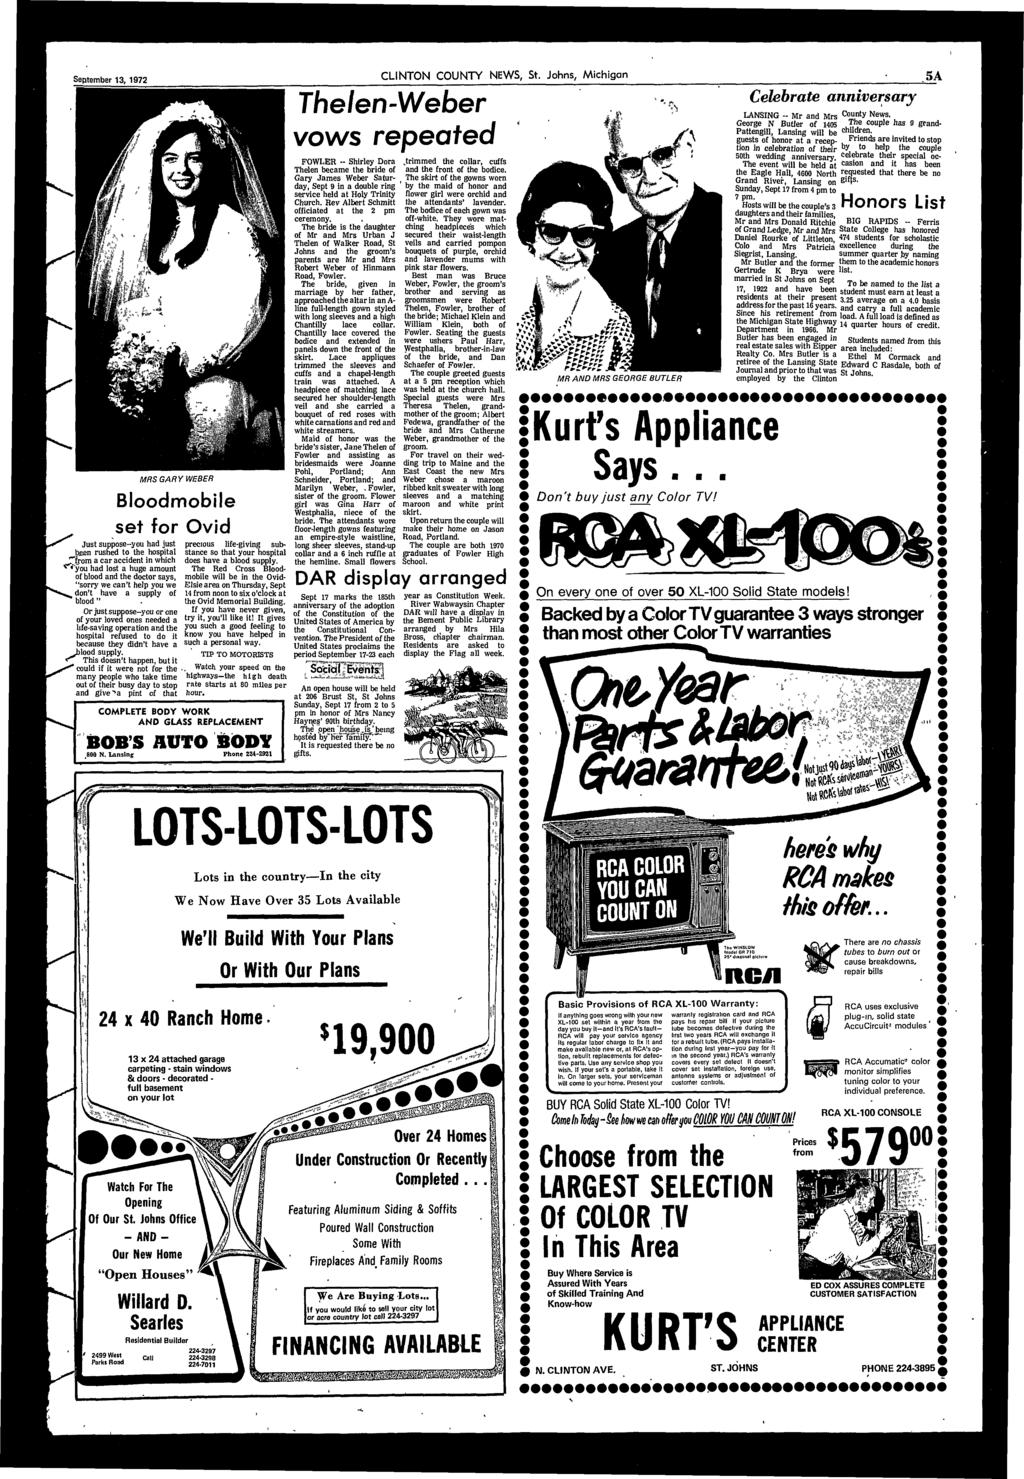 September 13, 1972 CLINTON COUNTY NEWS, St.